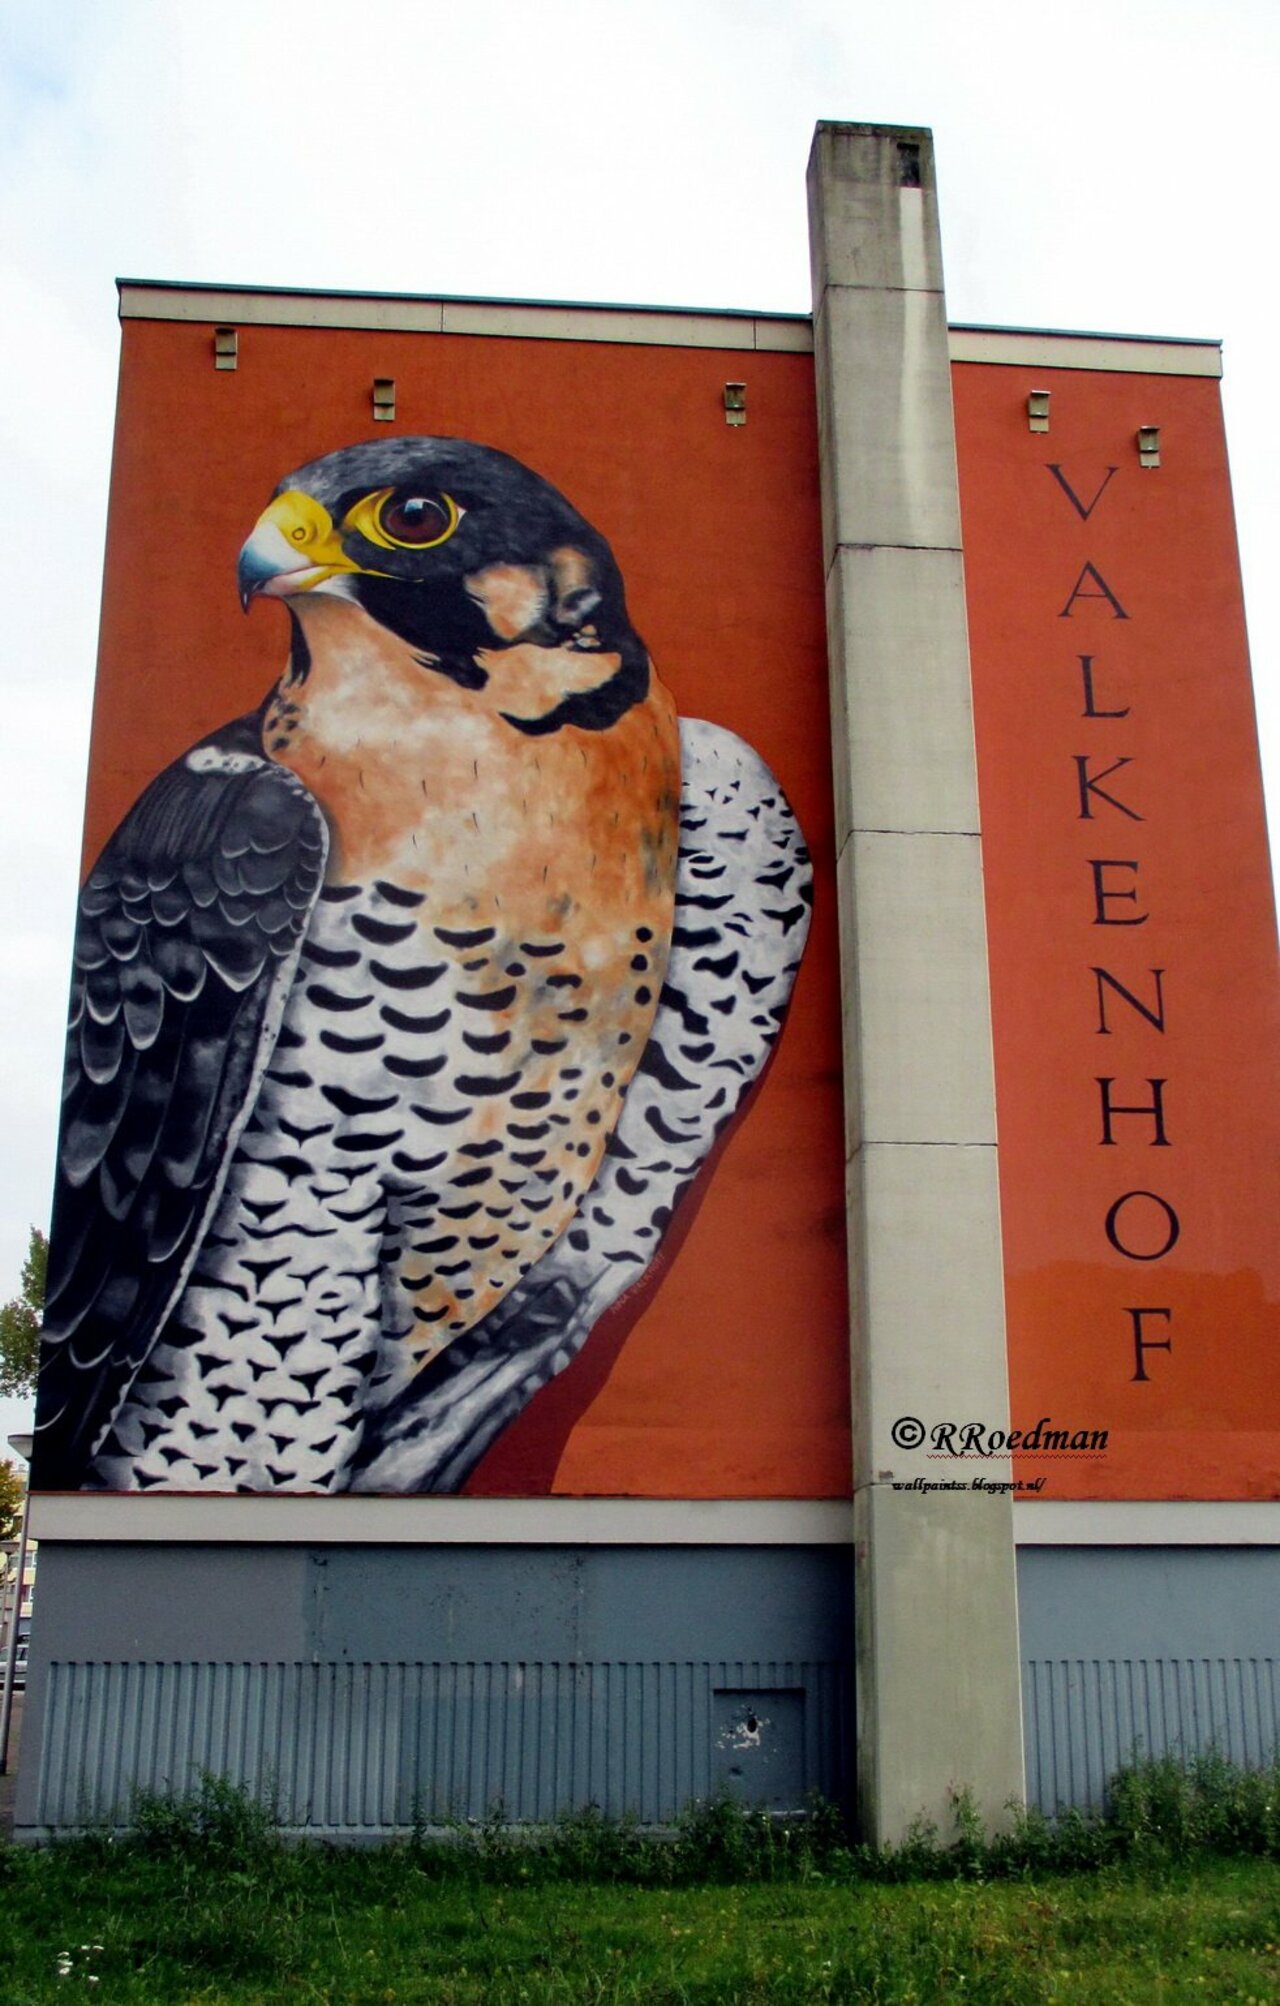 RT @RRoedman: #streetart #graffiti #mural falcon in  #CapelleAanDenIJssel  #netherlands ,2 pics at http://wallpaintss.blogspot.nl https://t.co/eVvY57fmT3